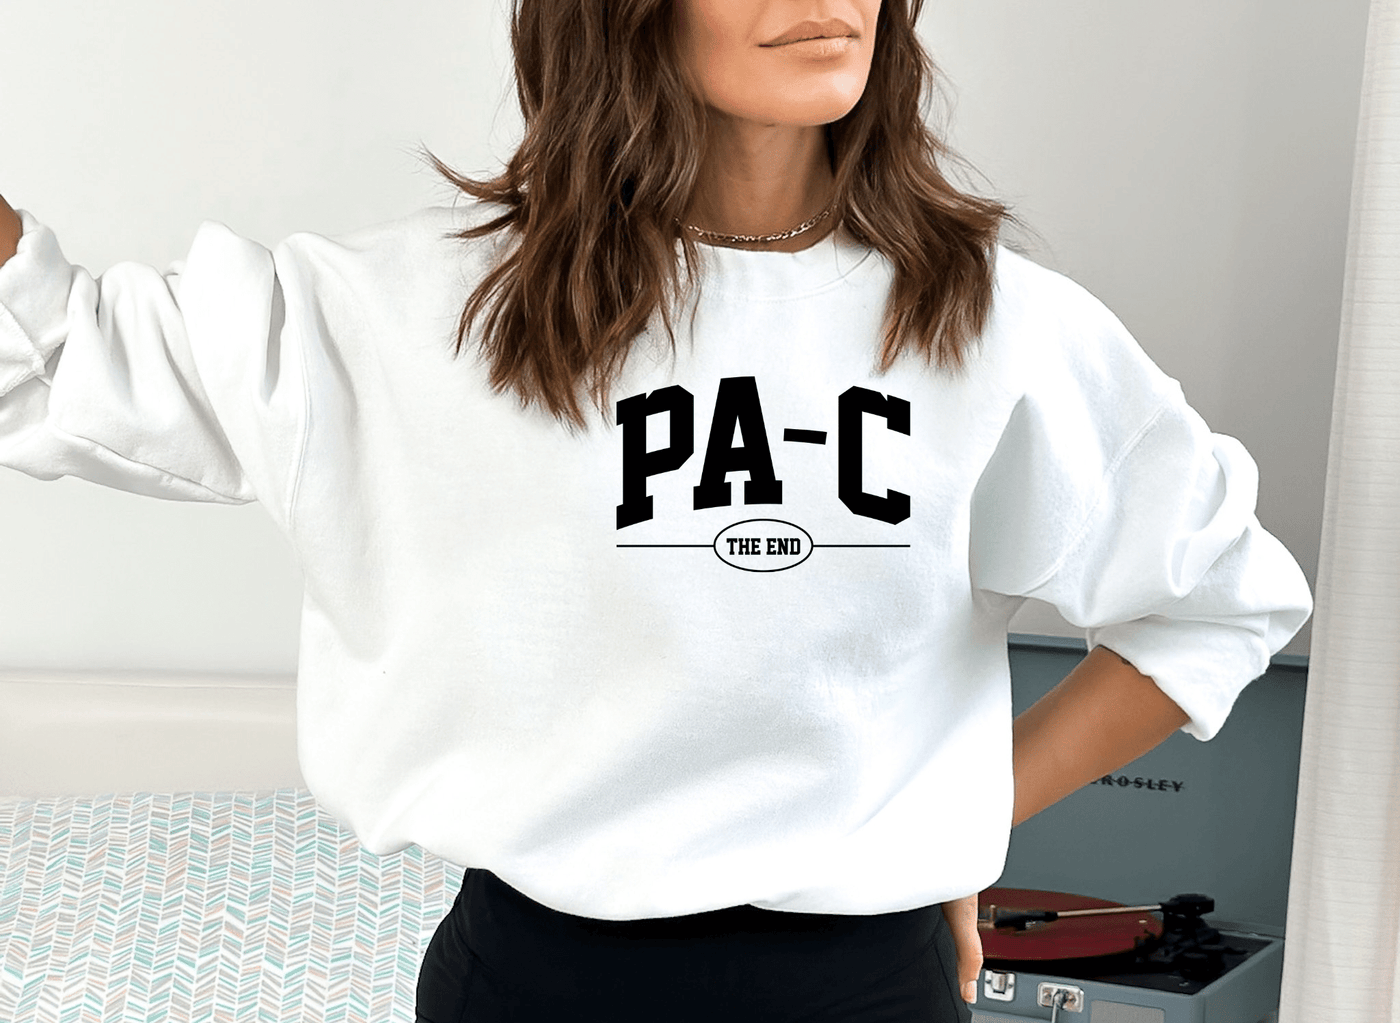 The PA-C "The End" Crewneck Sweatshirt